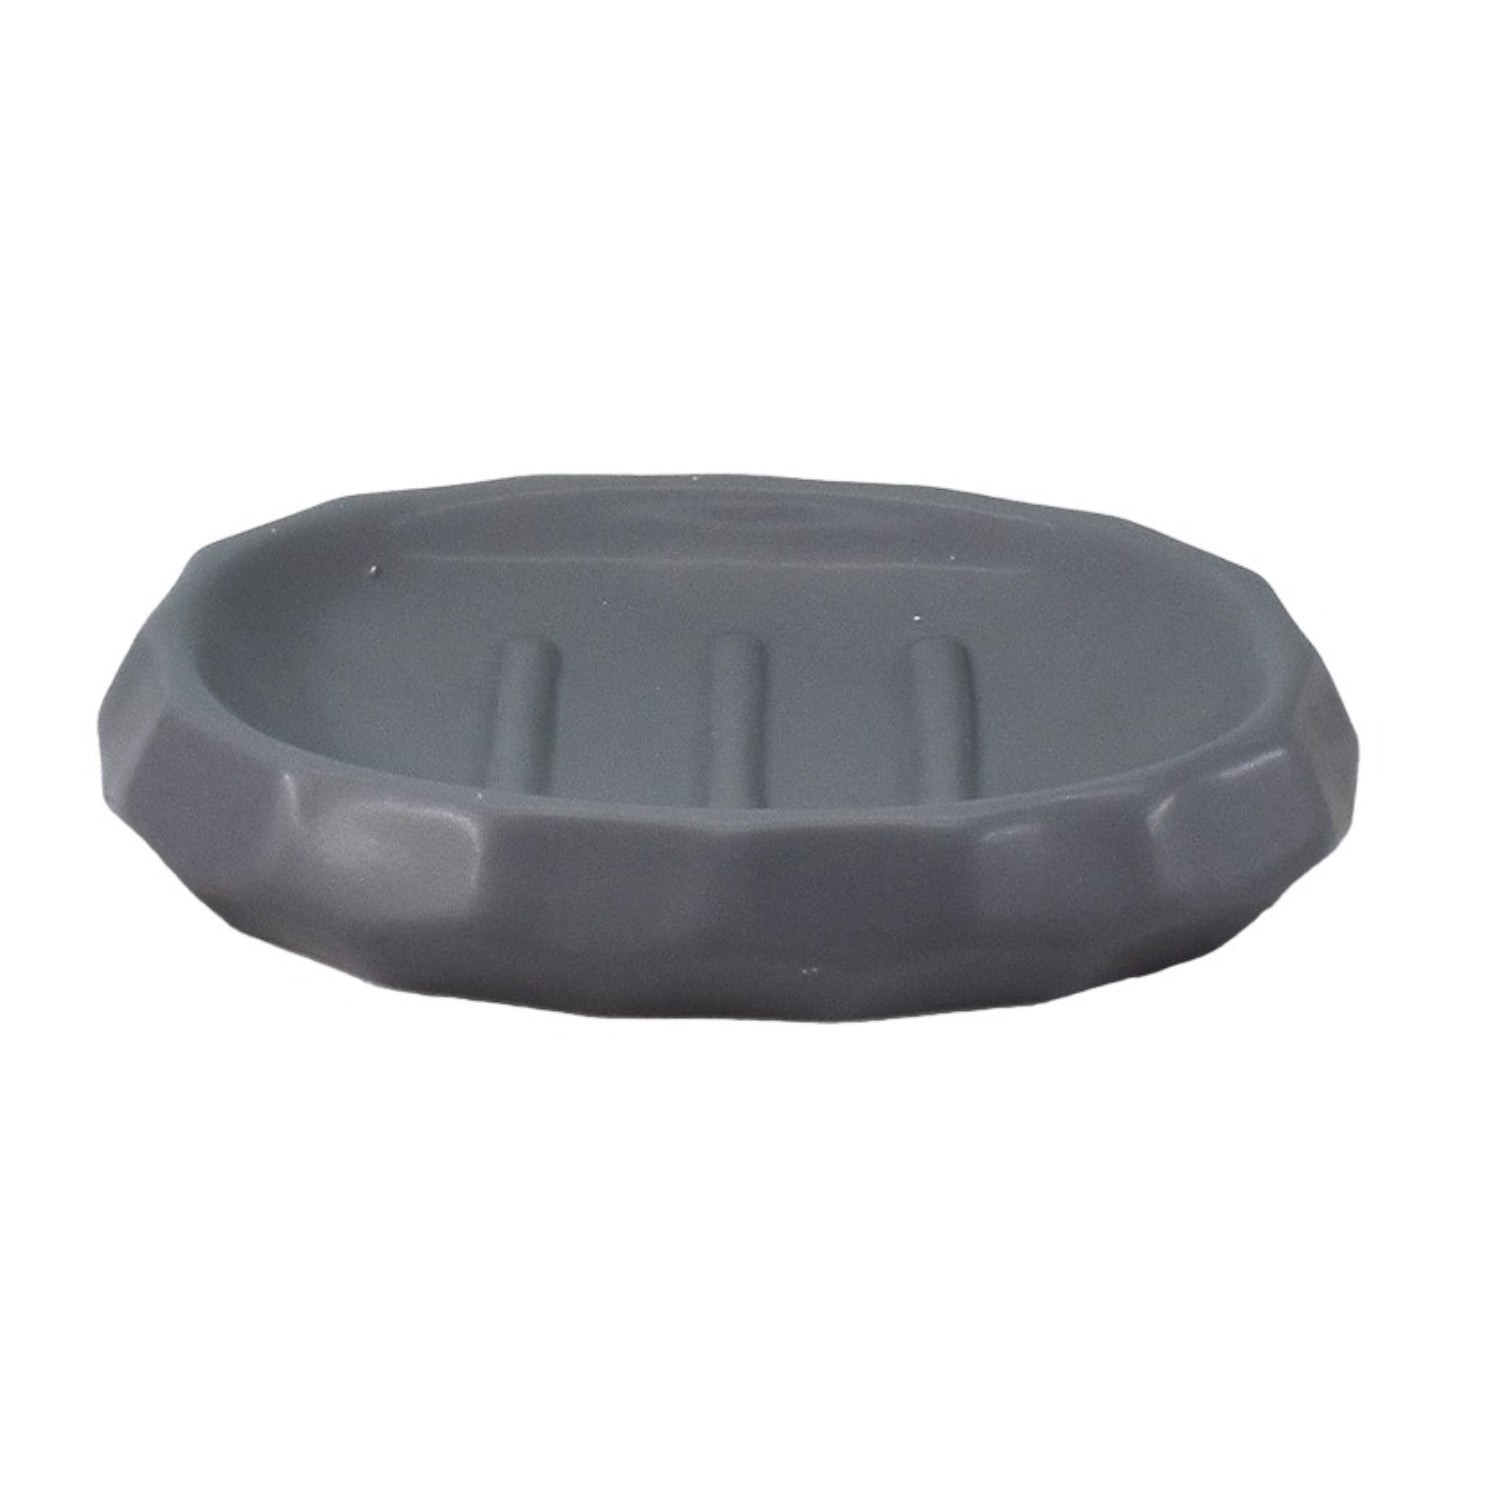 Ceramic Soap Dish Set of 1 Bathroom Accessories for Home (C1010)